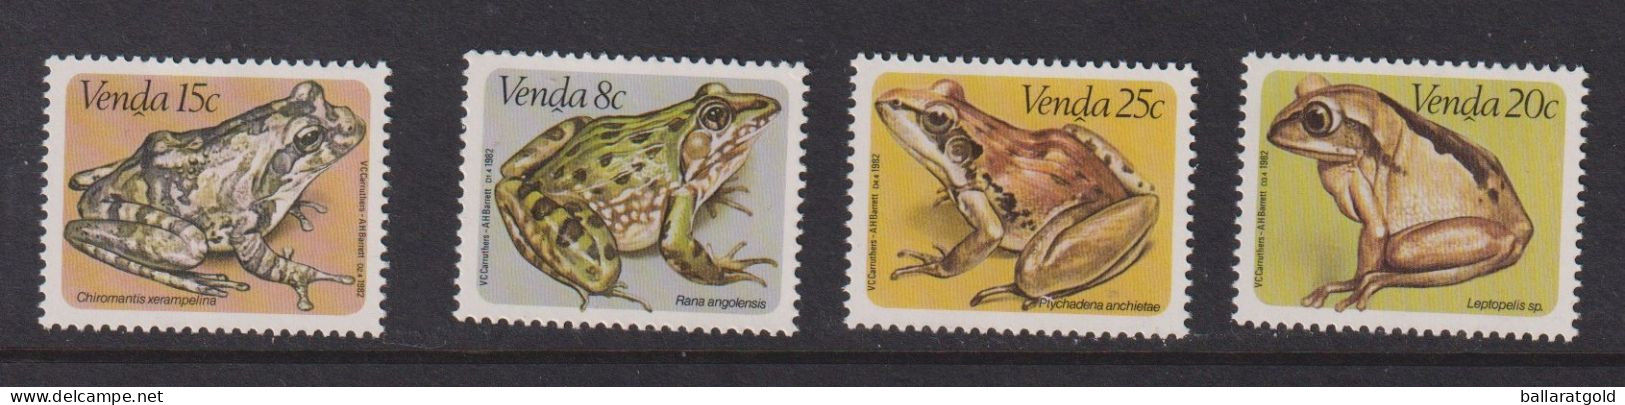 Venda 1982 Frogs Complete Set MNH - Venda